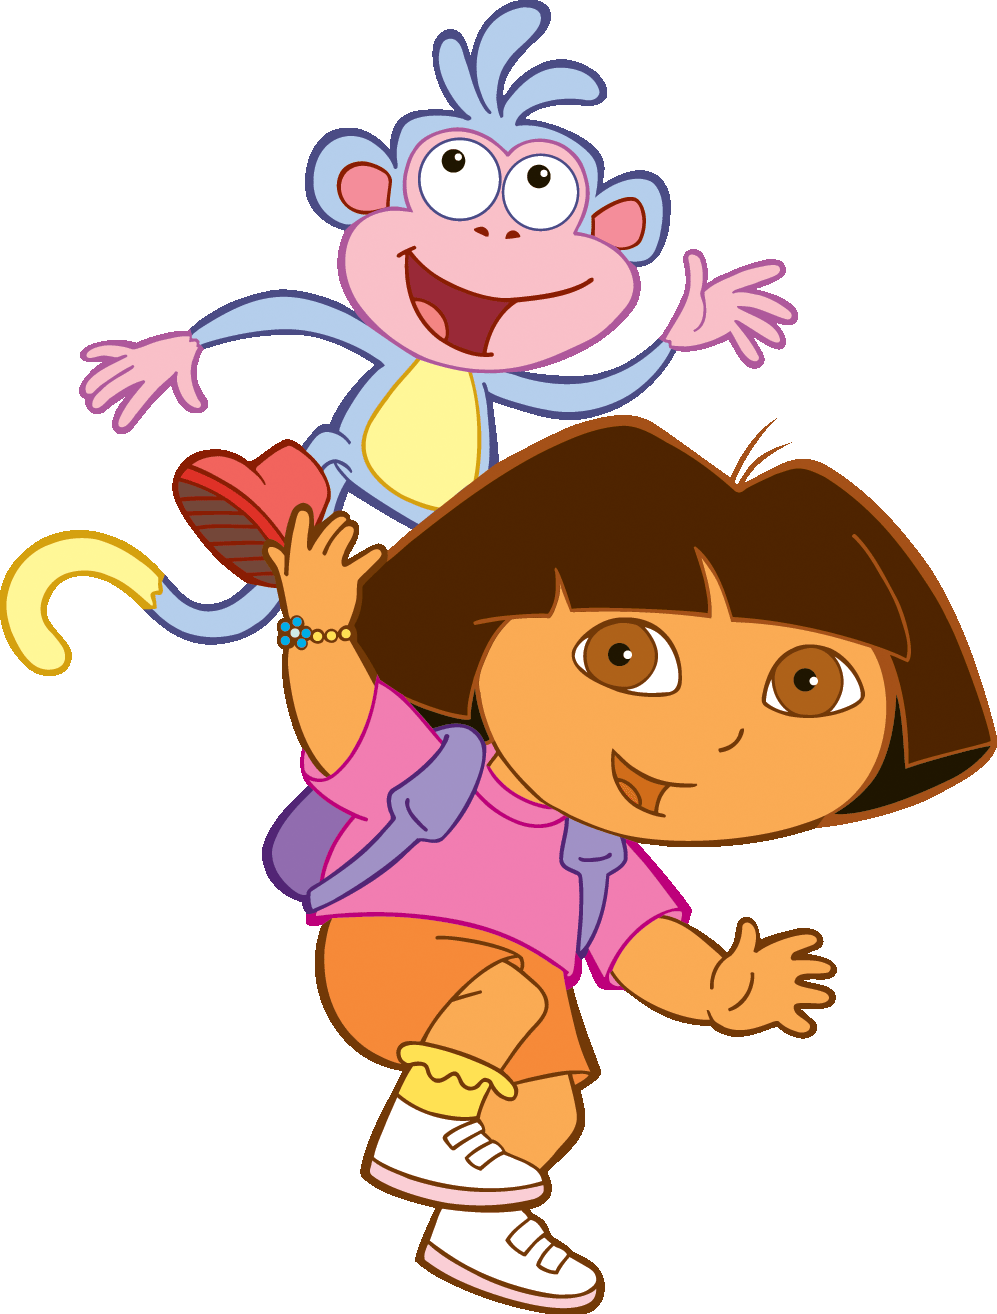 Cartoon Characters: Dora the Explorer (volume 2)